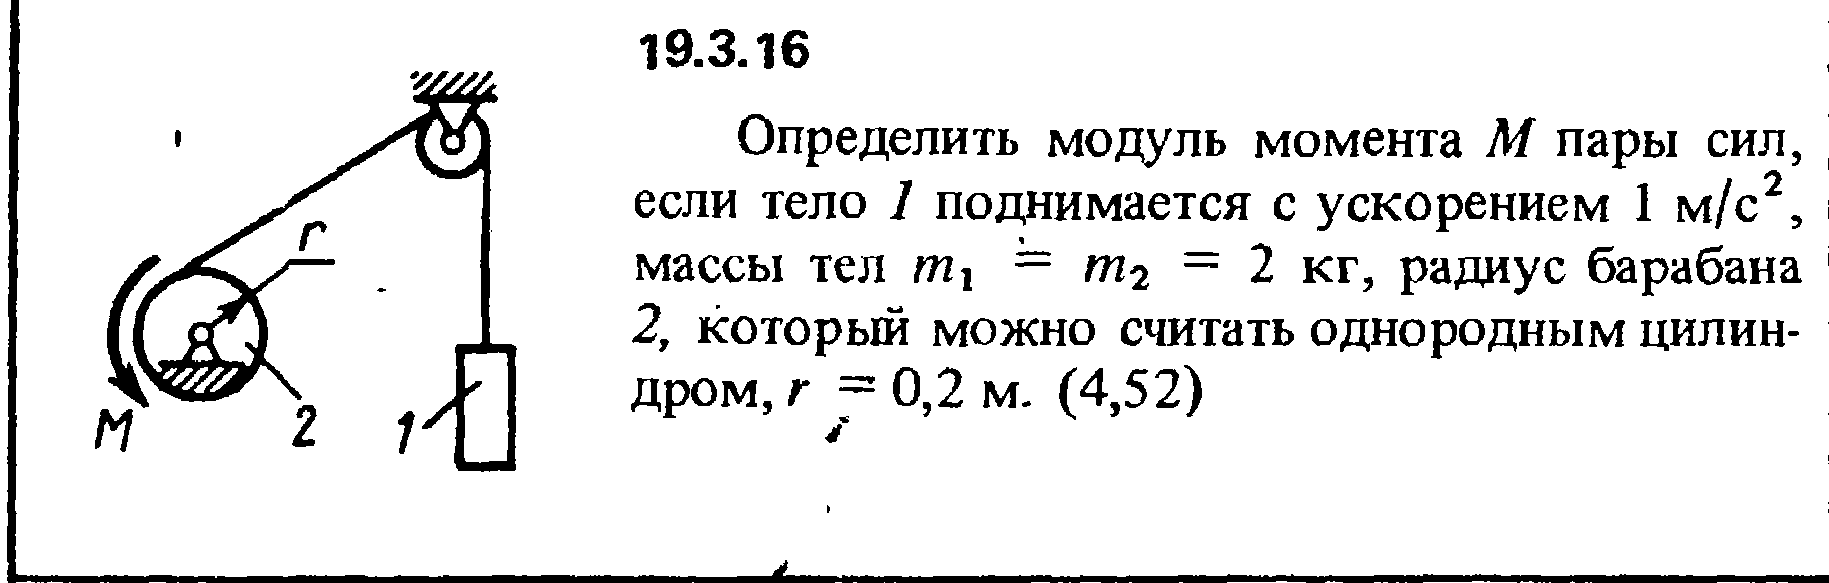 Решение 19.3.16 из сборника (решебника) Кепе О.Е. 1989